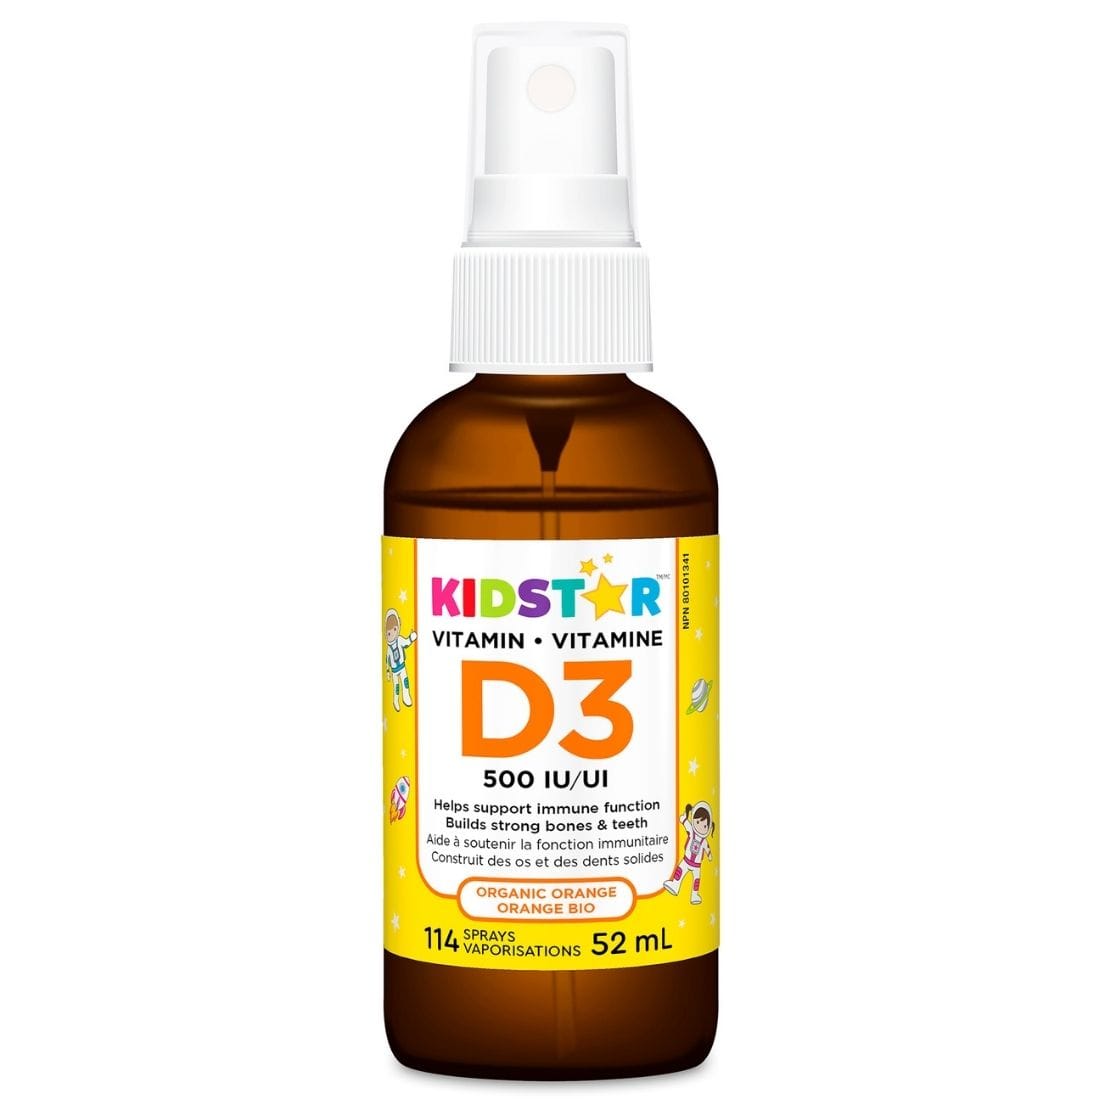 Kidstar Vitamin D3 Spray 500IU in Organic MCT Oil, 114 Sprays, 52ml